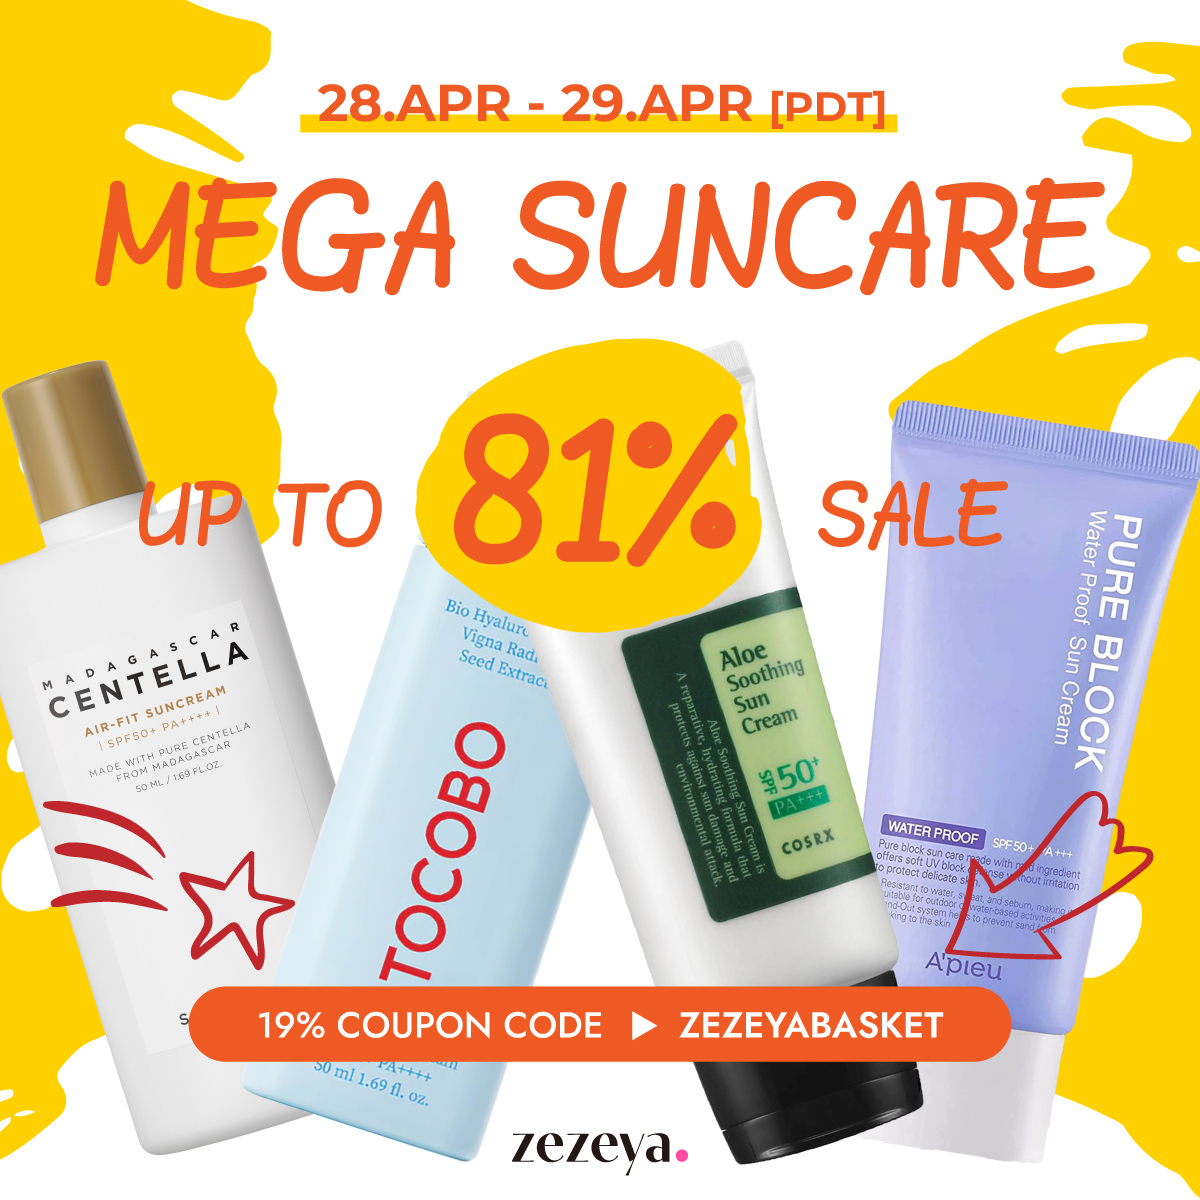 ☀️MEGA SUNCARE D/C EVENT UP to 81%

📅28. APR ~ 29. APR [PDT]

And, Enter the Serial Code, Get a 19% Discount on ALL Items❗️❗️❗️
🖊️CODE : ZEZEYABASKET

💕Zezeya.com
#zezeya #event #Kbeauty #Discount #Mega #Sun #Suncare #suncream #sungel #sunstick #sunscreen #Beauty